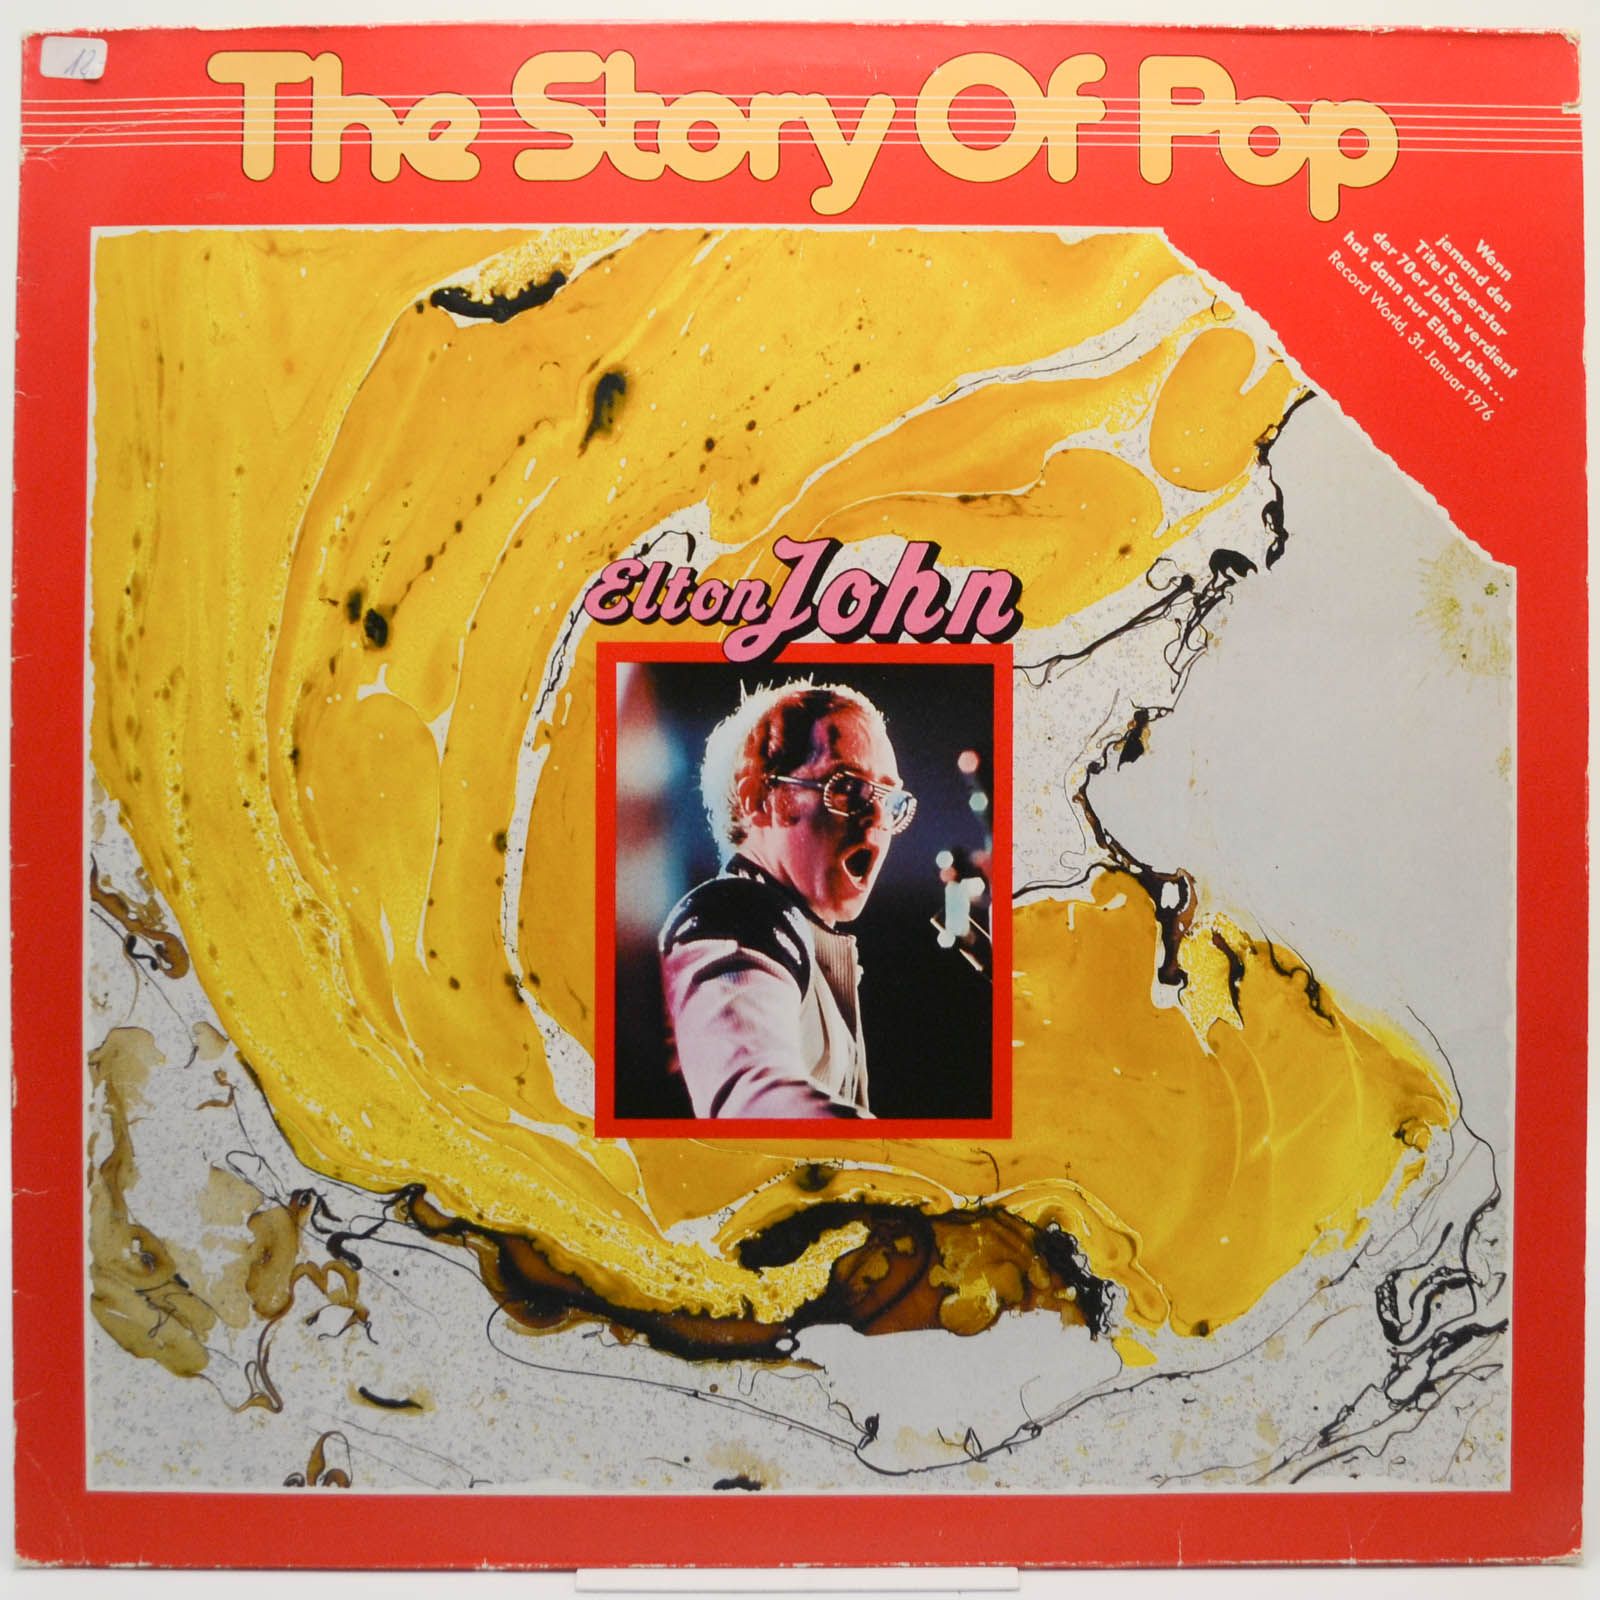 Elton John — The Story Of Pop, 1977